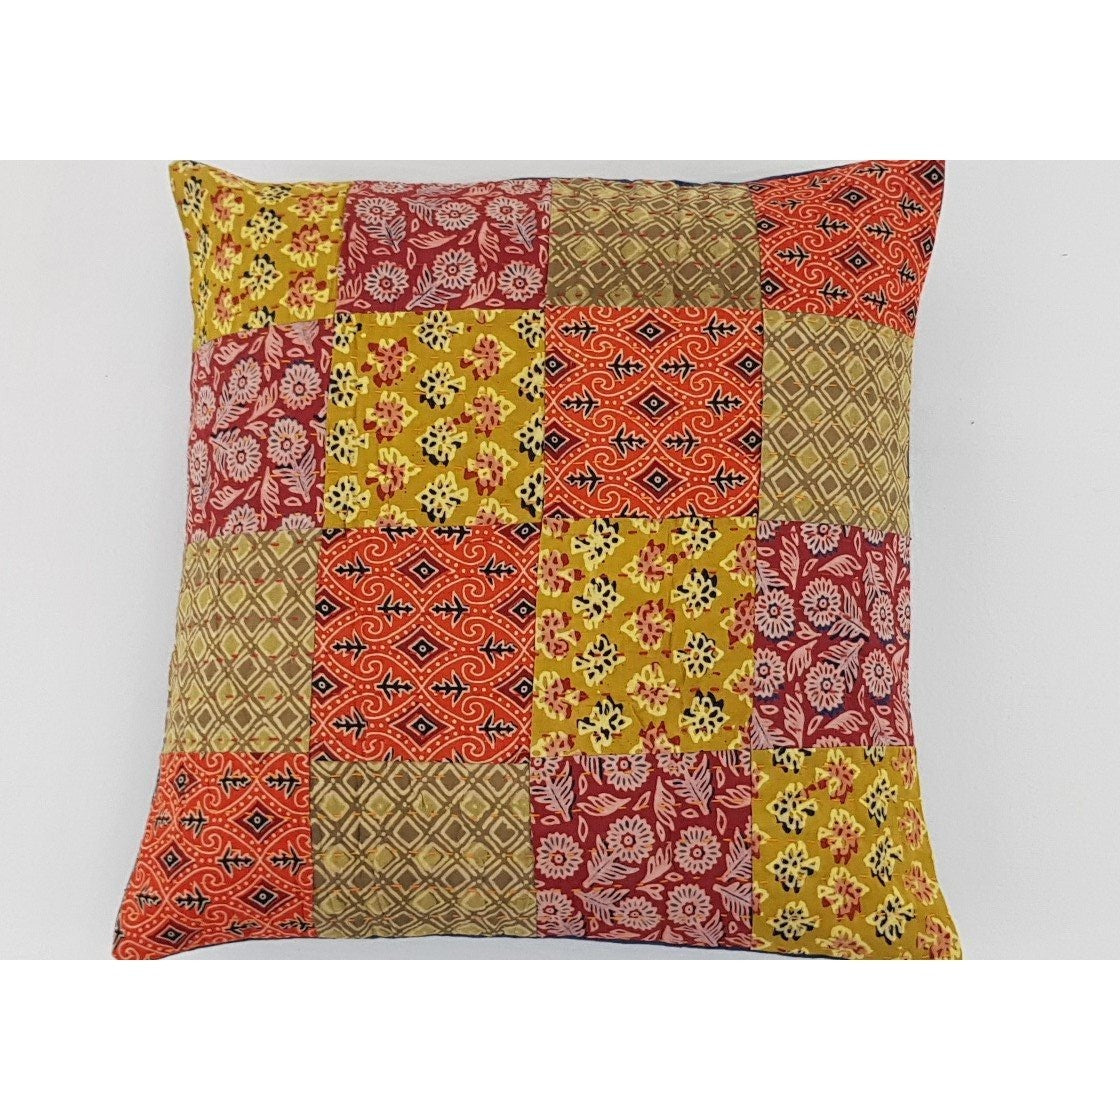 Cotton Block Print Patchwork Kantha Stitch Cushion Cover - Vinshika